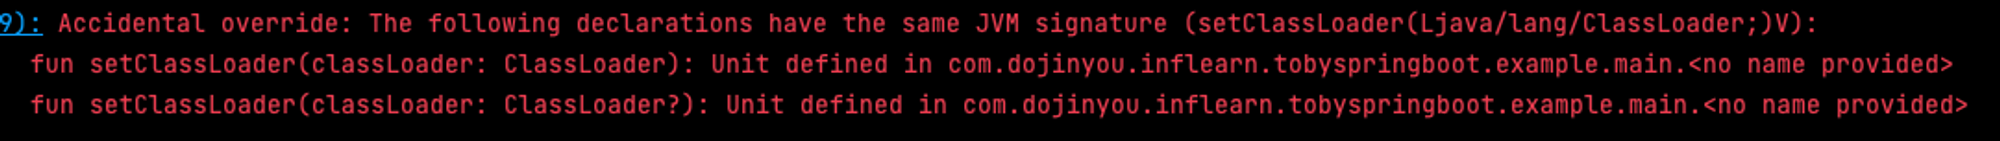 same JVM signature 문제